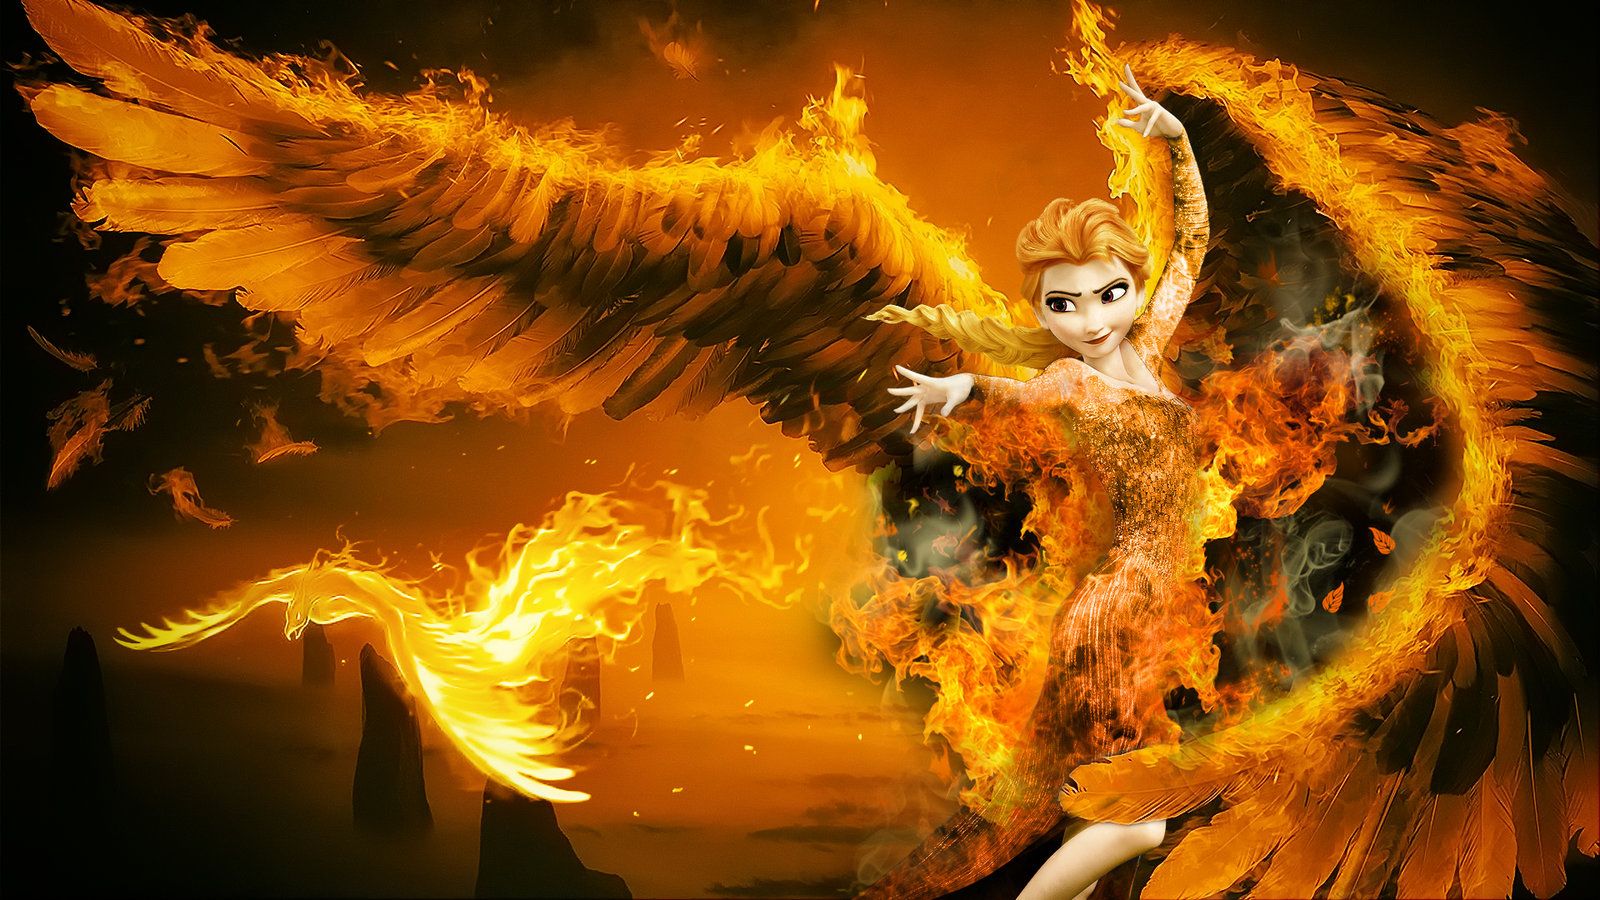 Wings of Fire Wallpaper .hipwallpaper.com